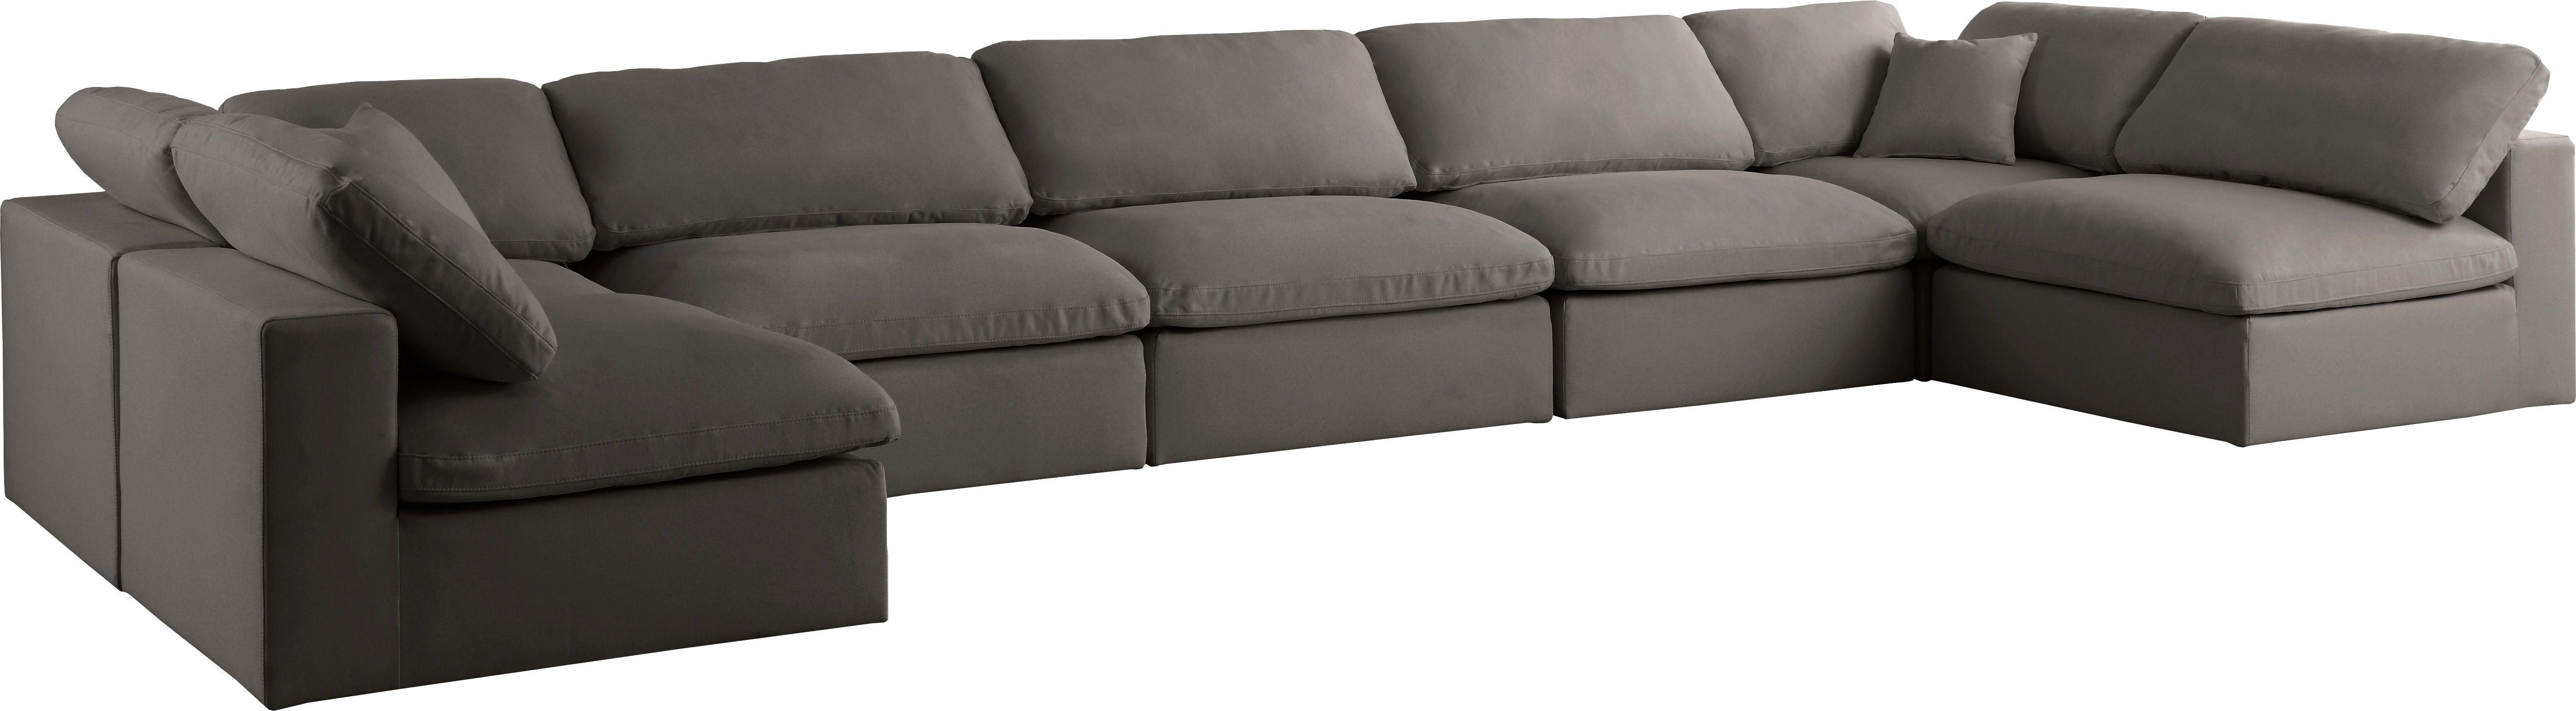 Meridian Furniture - Plush - Velvet Standart Comfort Modular Sectional - Grey - 5th Avenue Furniture